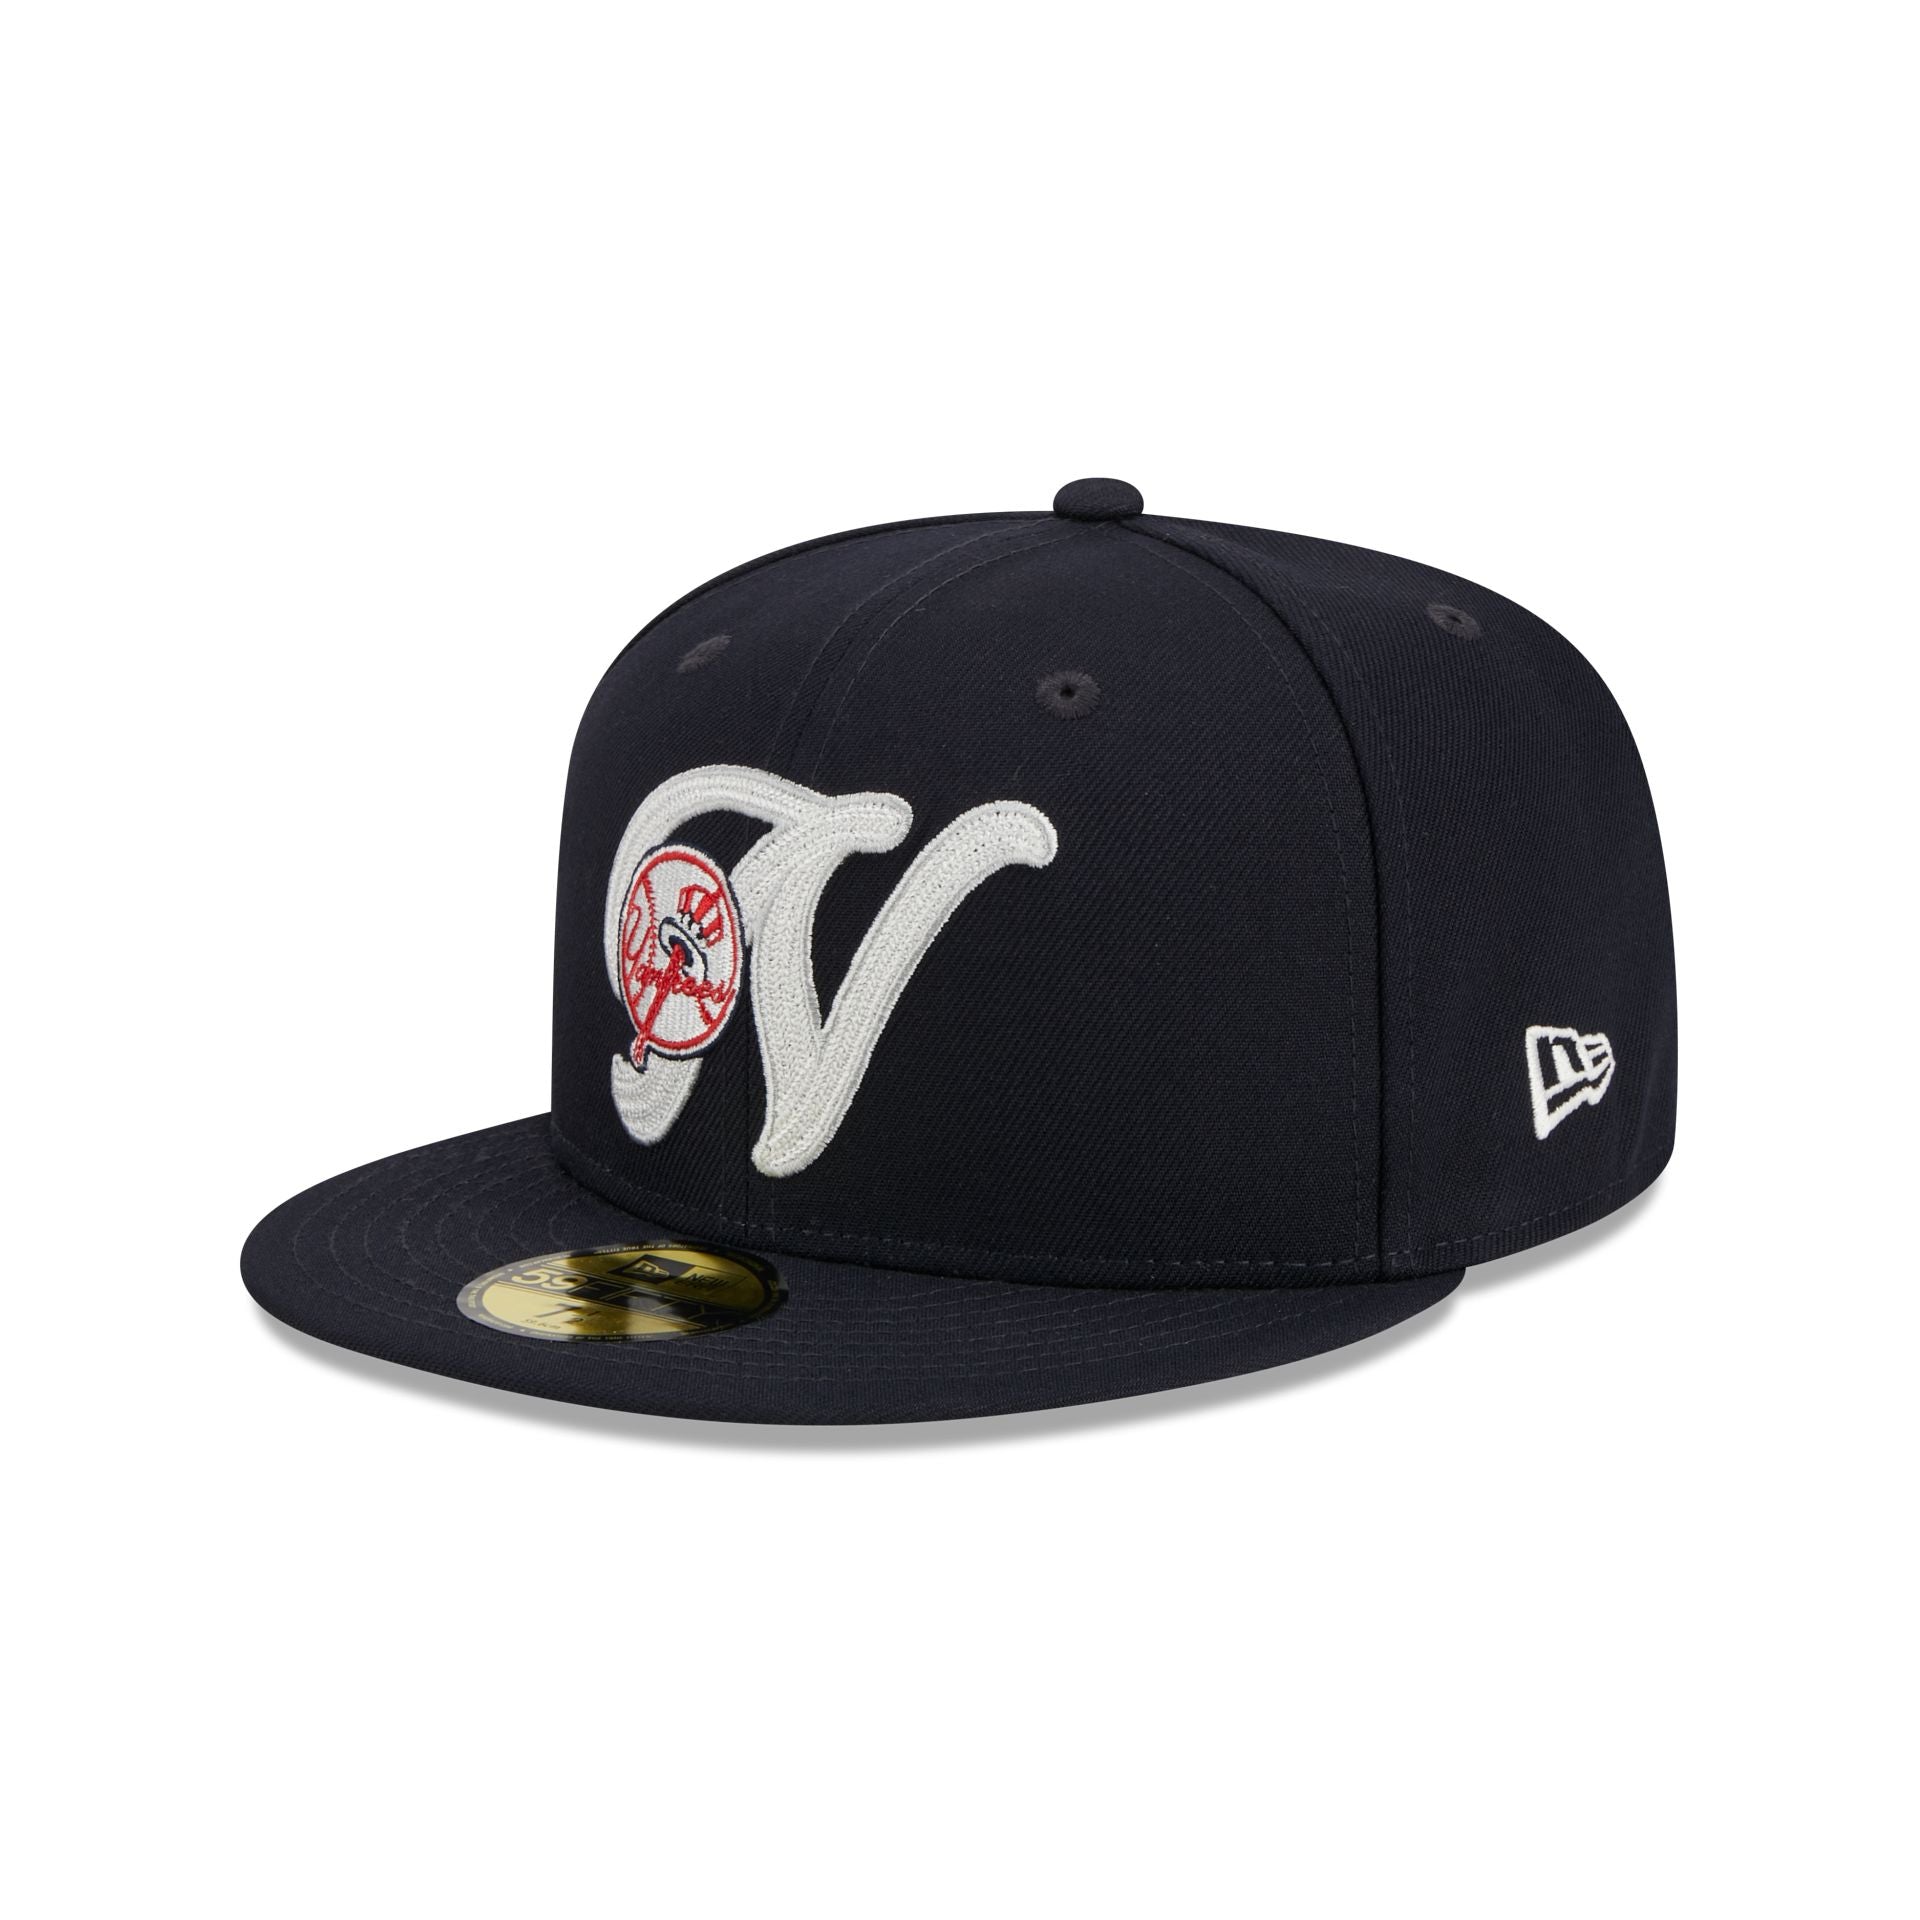 New York Yankees Era Black & White Basic 59FIFTY - Fitted Hat